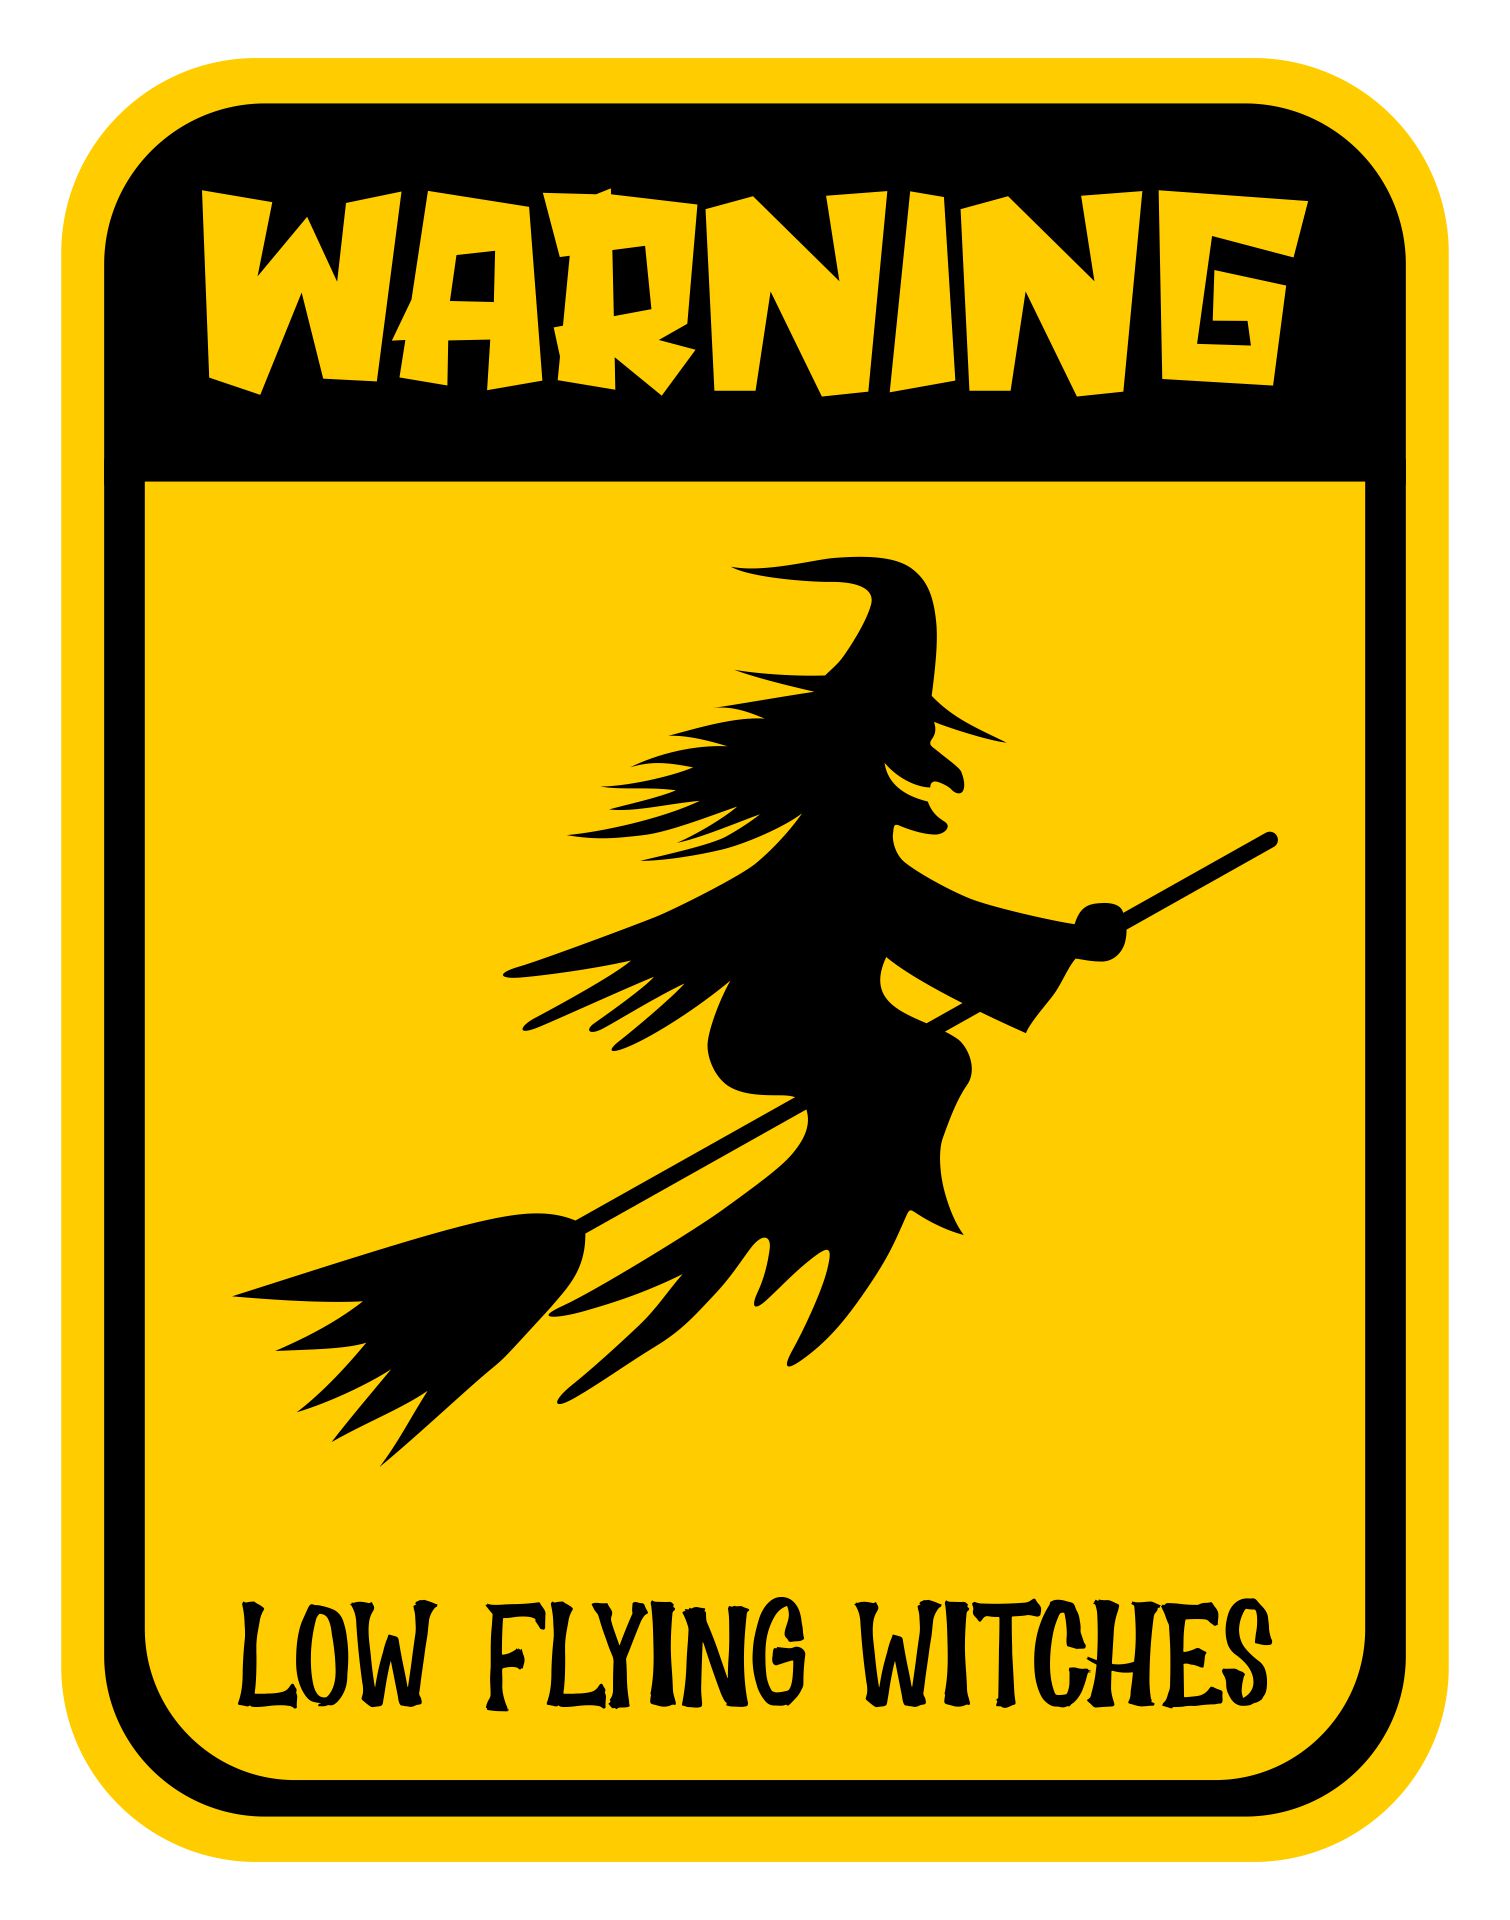 Printable Halloween Warning Signs